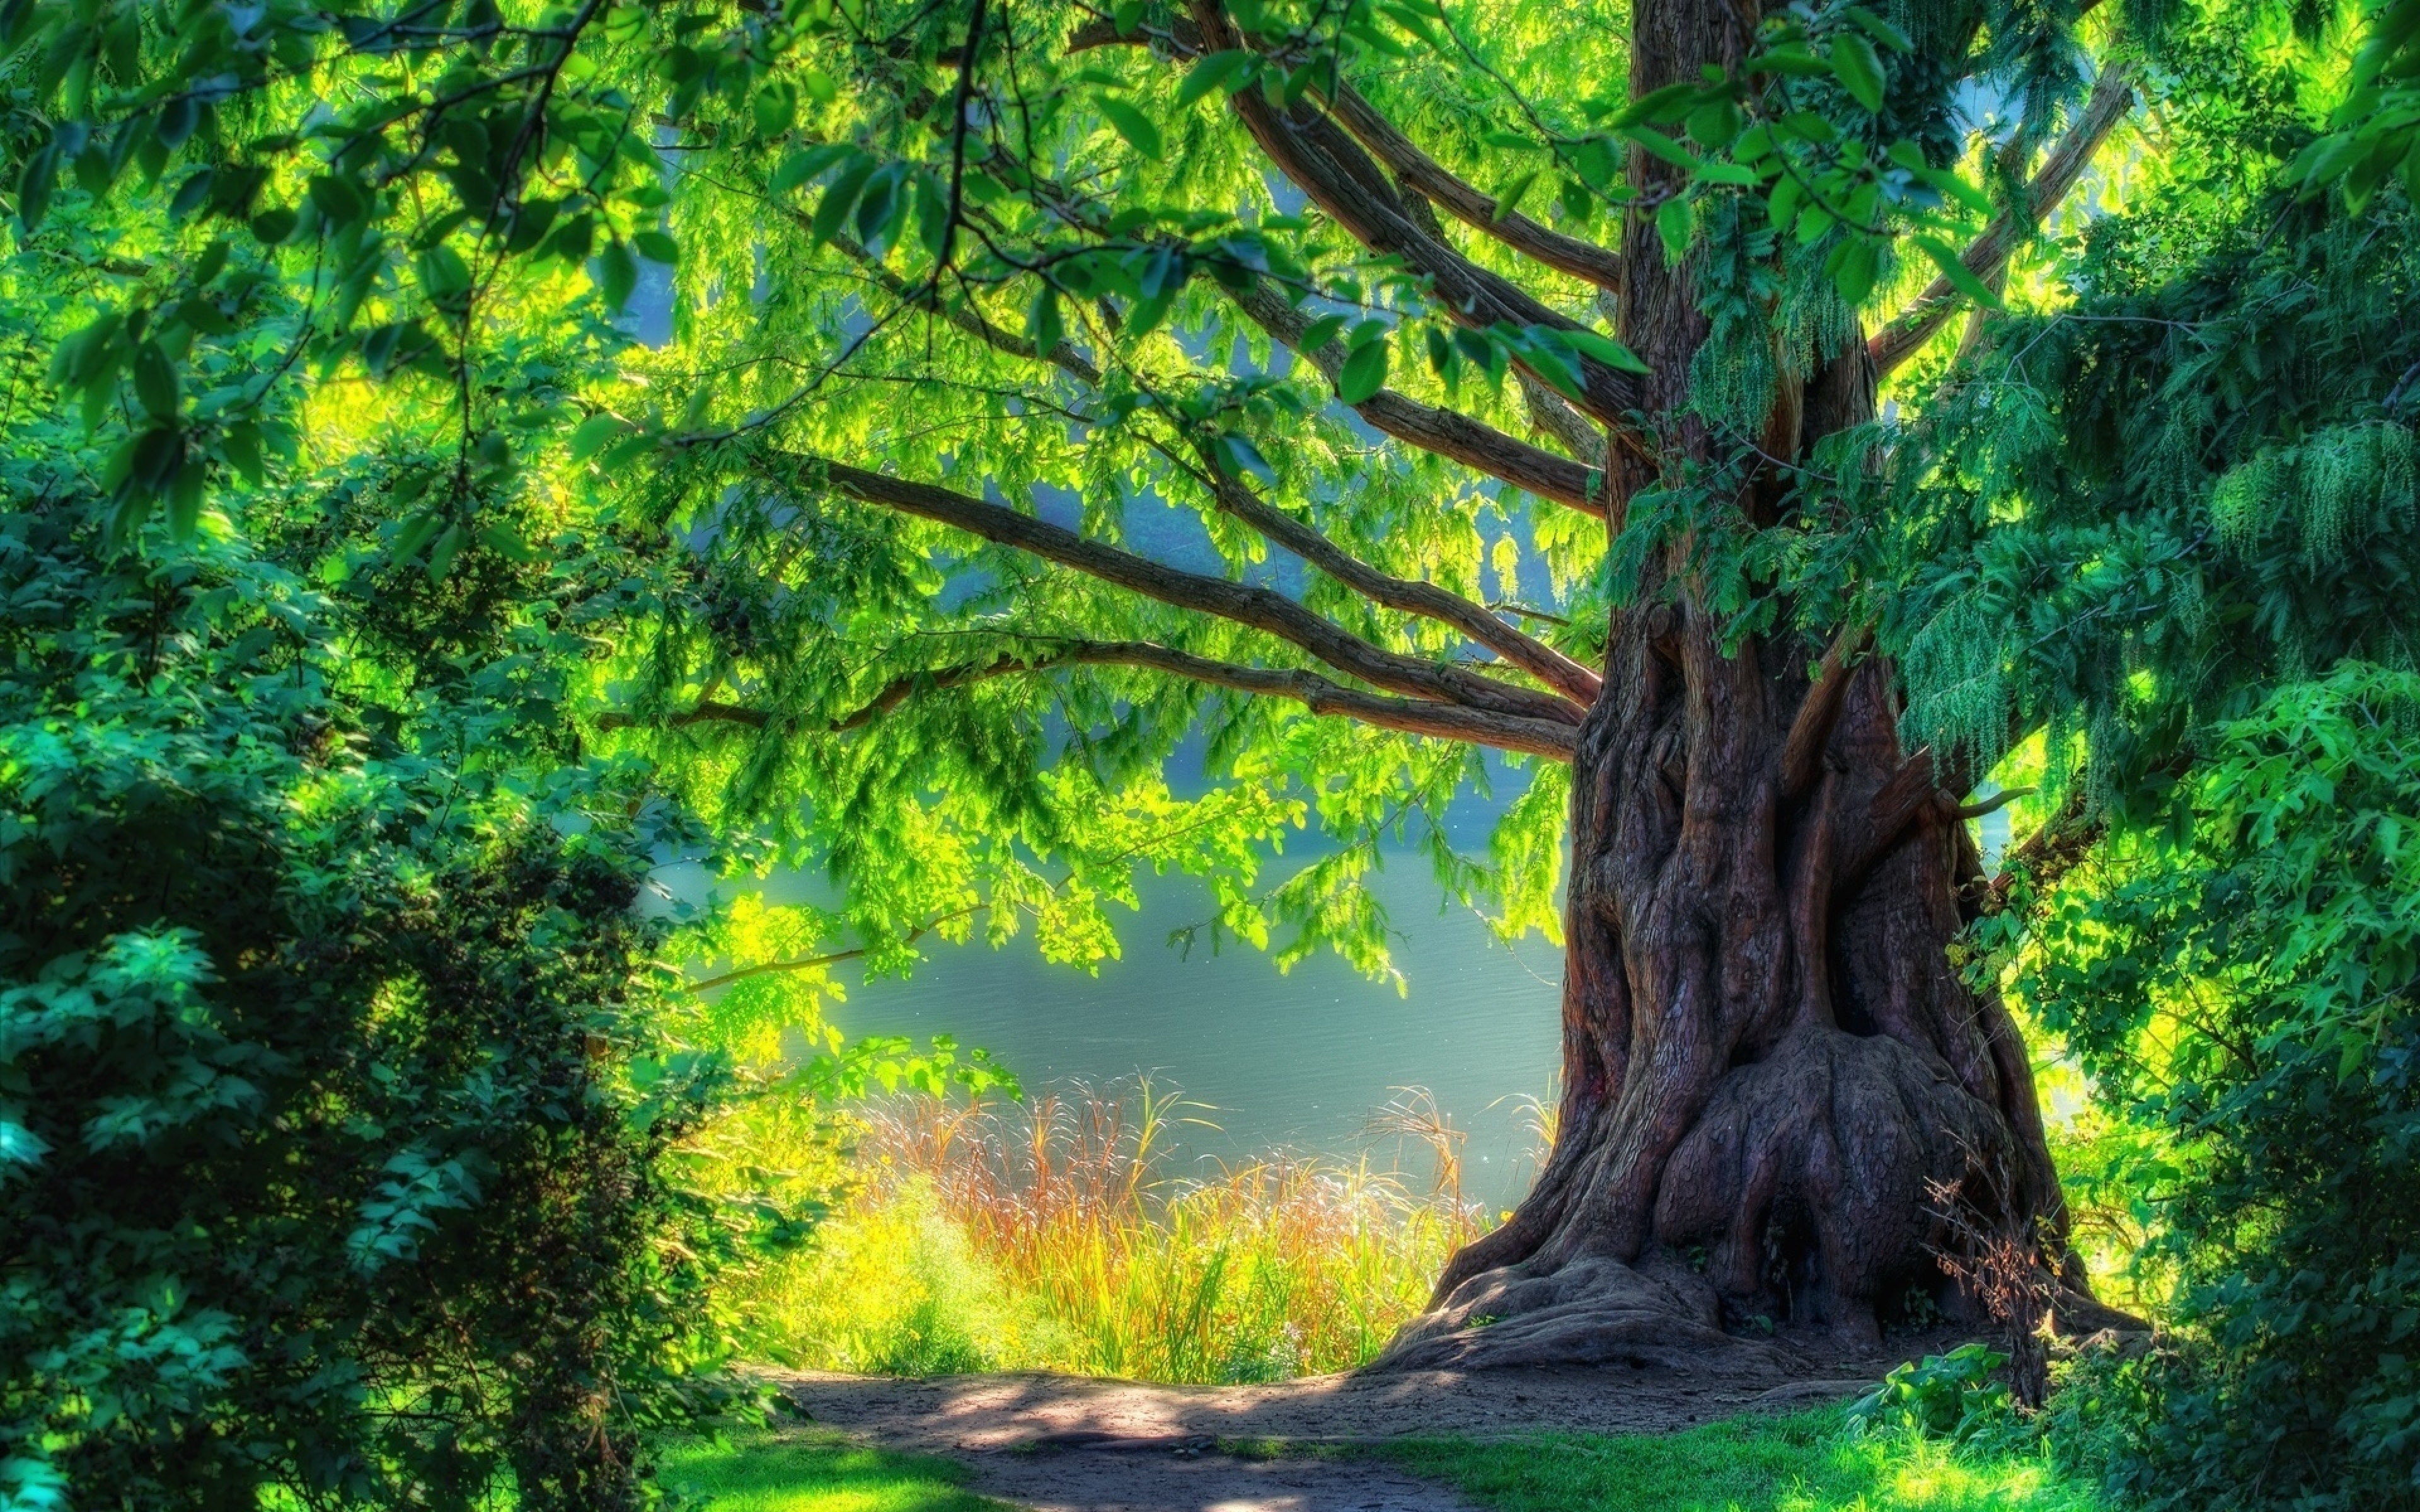 Условия жизни деревьев. Милорн дерево. Сказочное дерево. Дерево красиво. Красивое дерево в лесу.